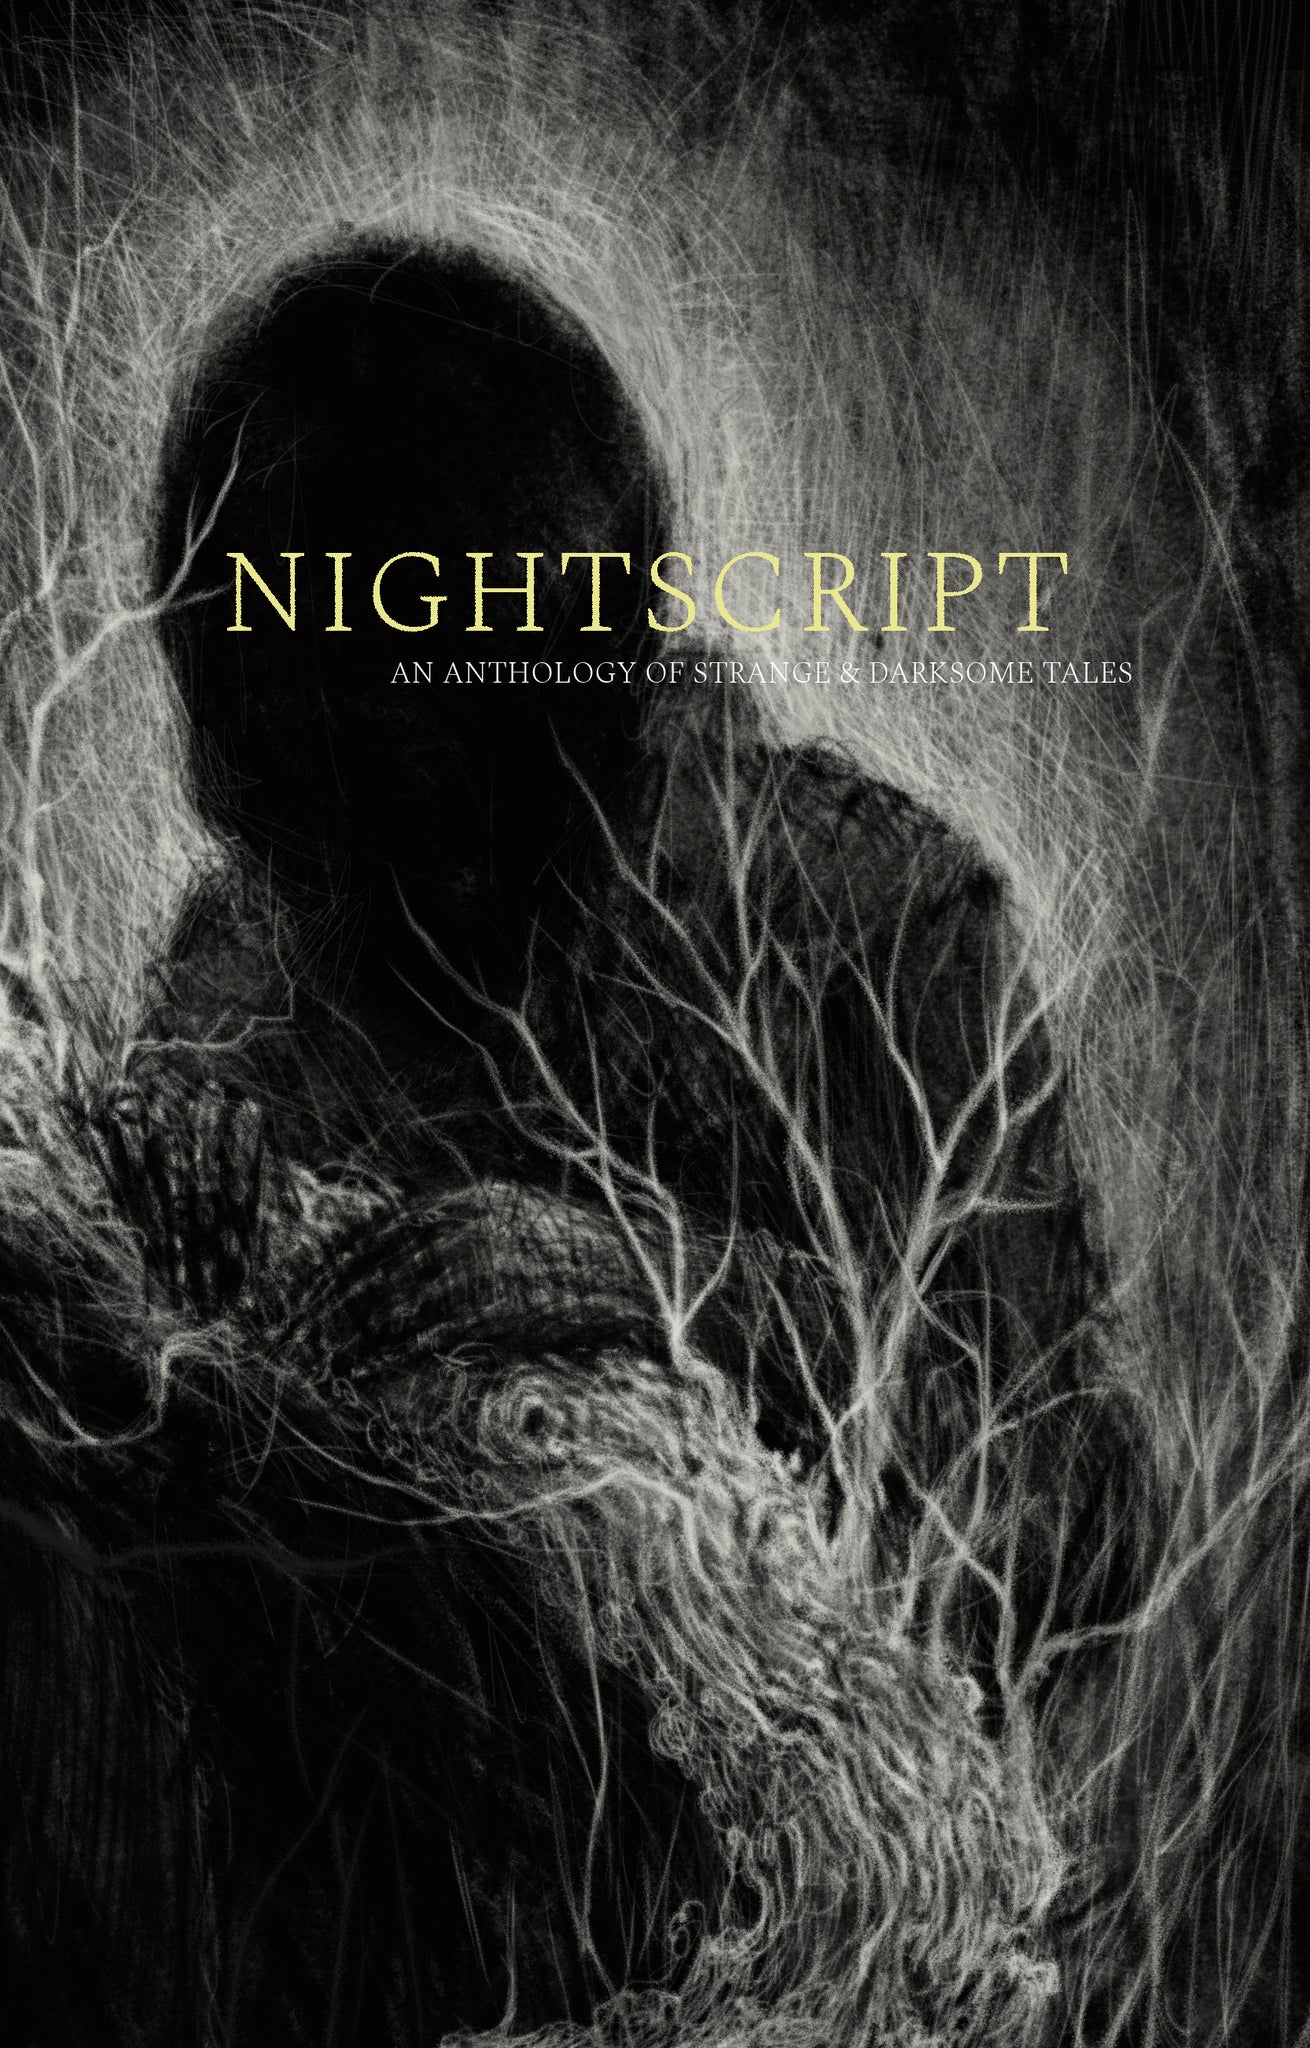 Nightscript 8: An Anthology of Strange & Darksome Tales ed by C.M. Muller